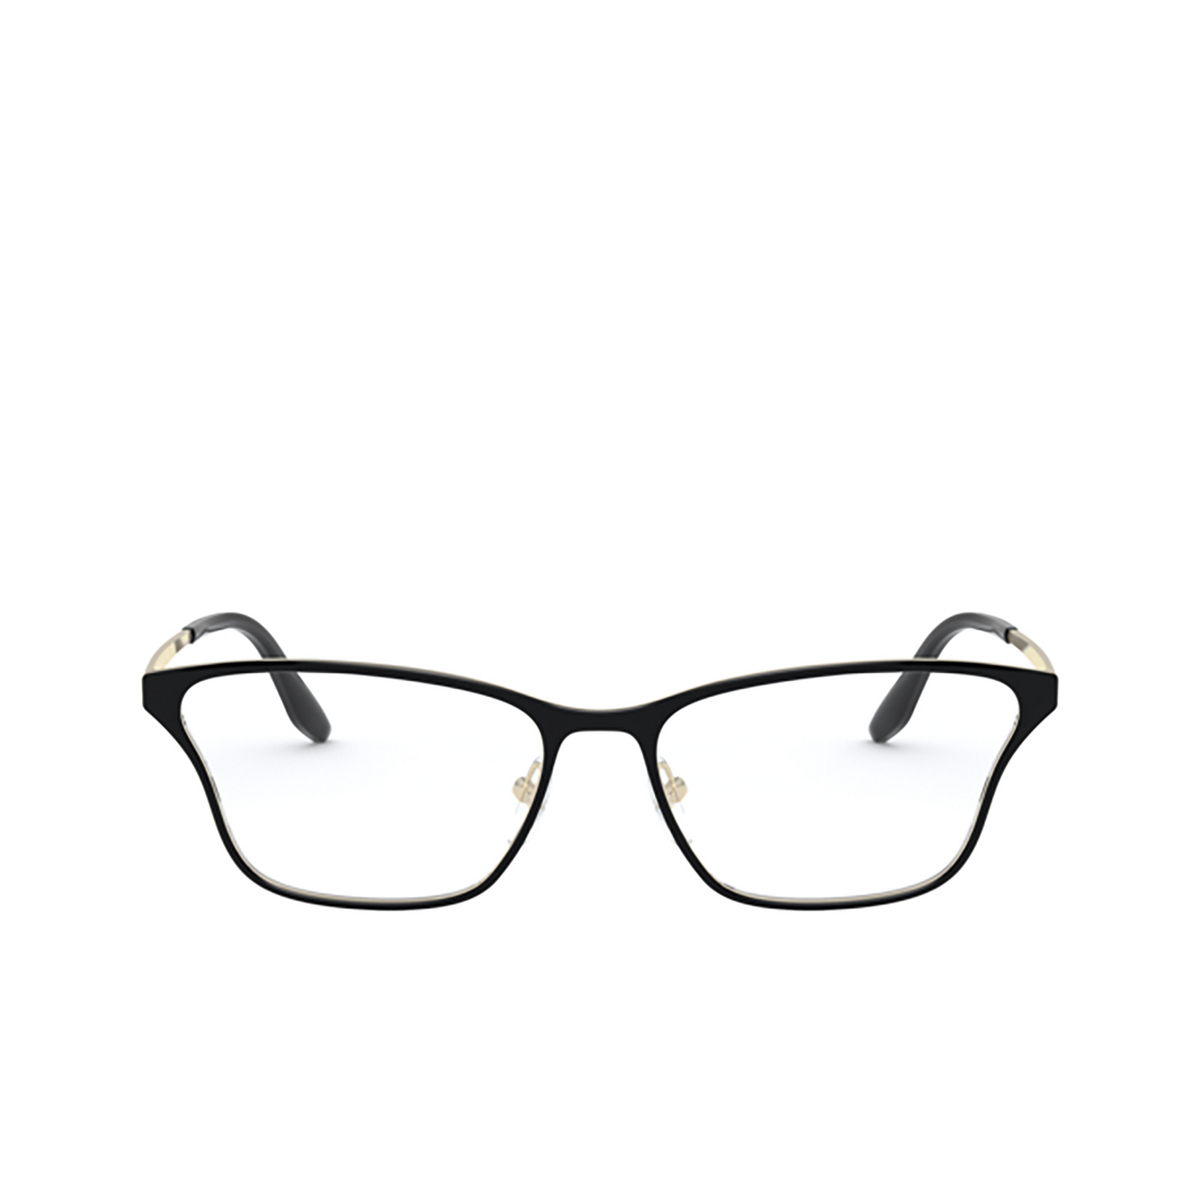 Prada® Butterfly Eyeglasses: PR 60XV color Top Black / Pale Gold AAV1O1 - 1/3.